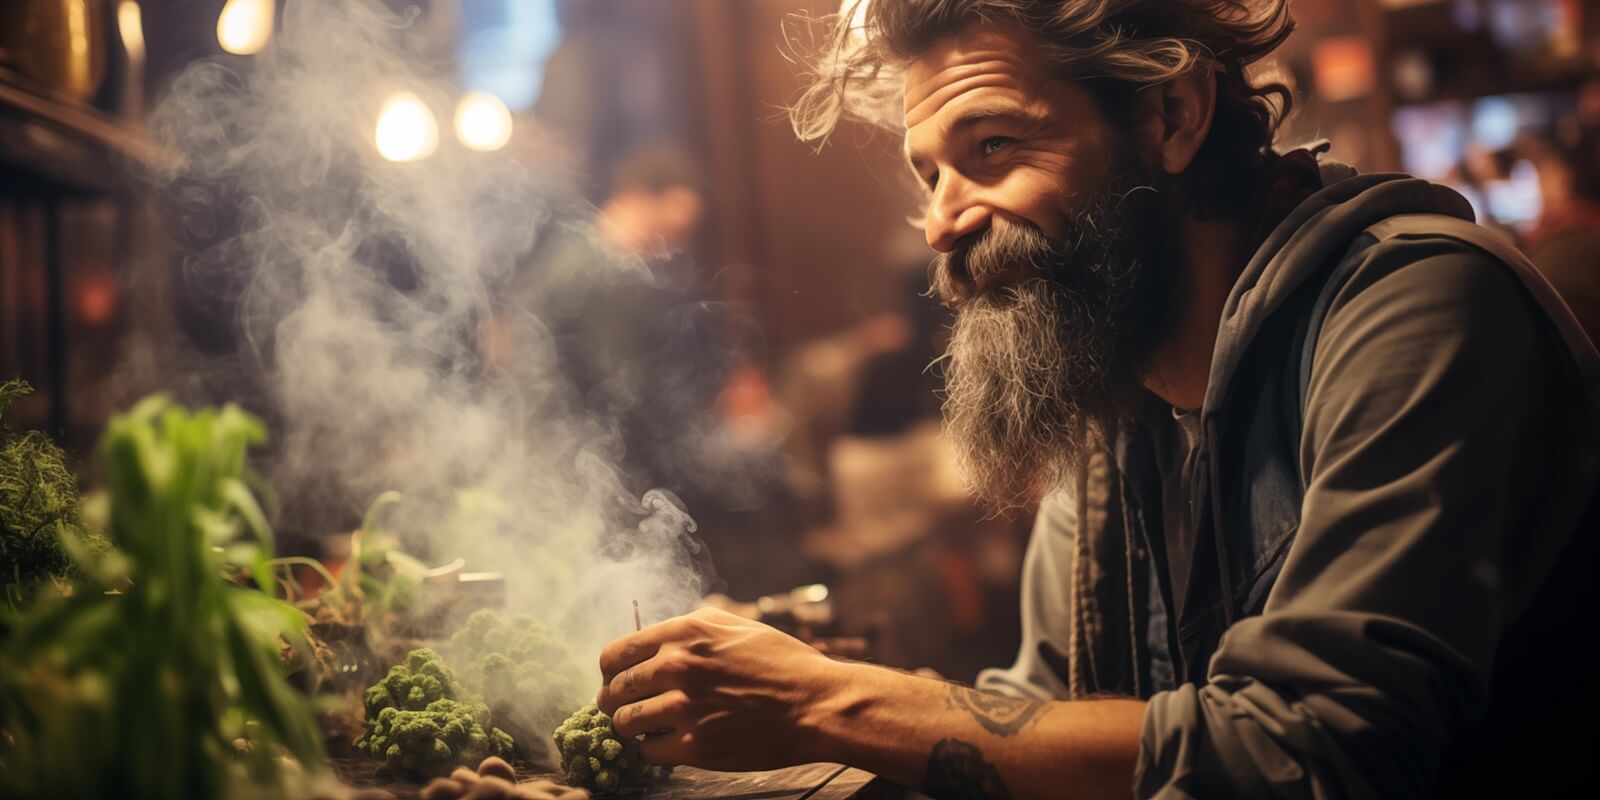 Boston man sitting in a recreational cannabis dispensary